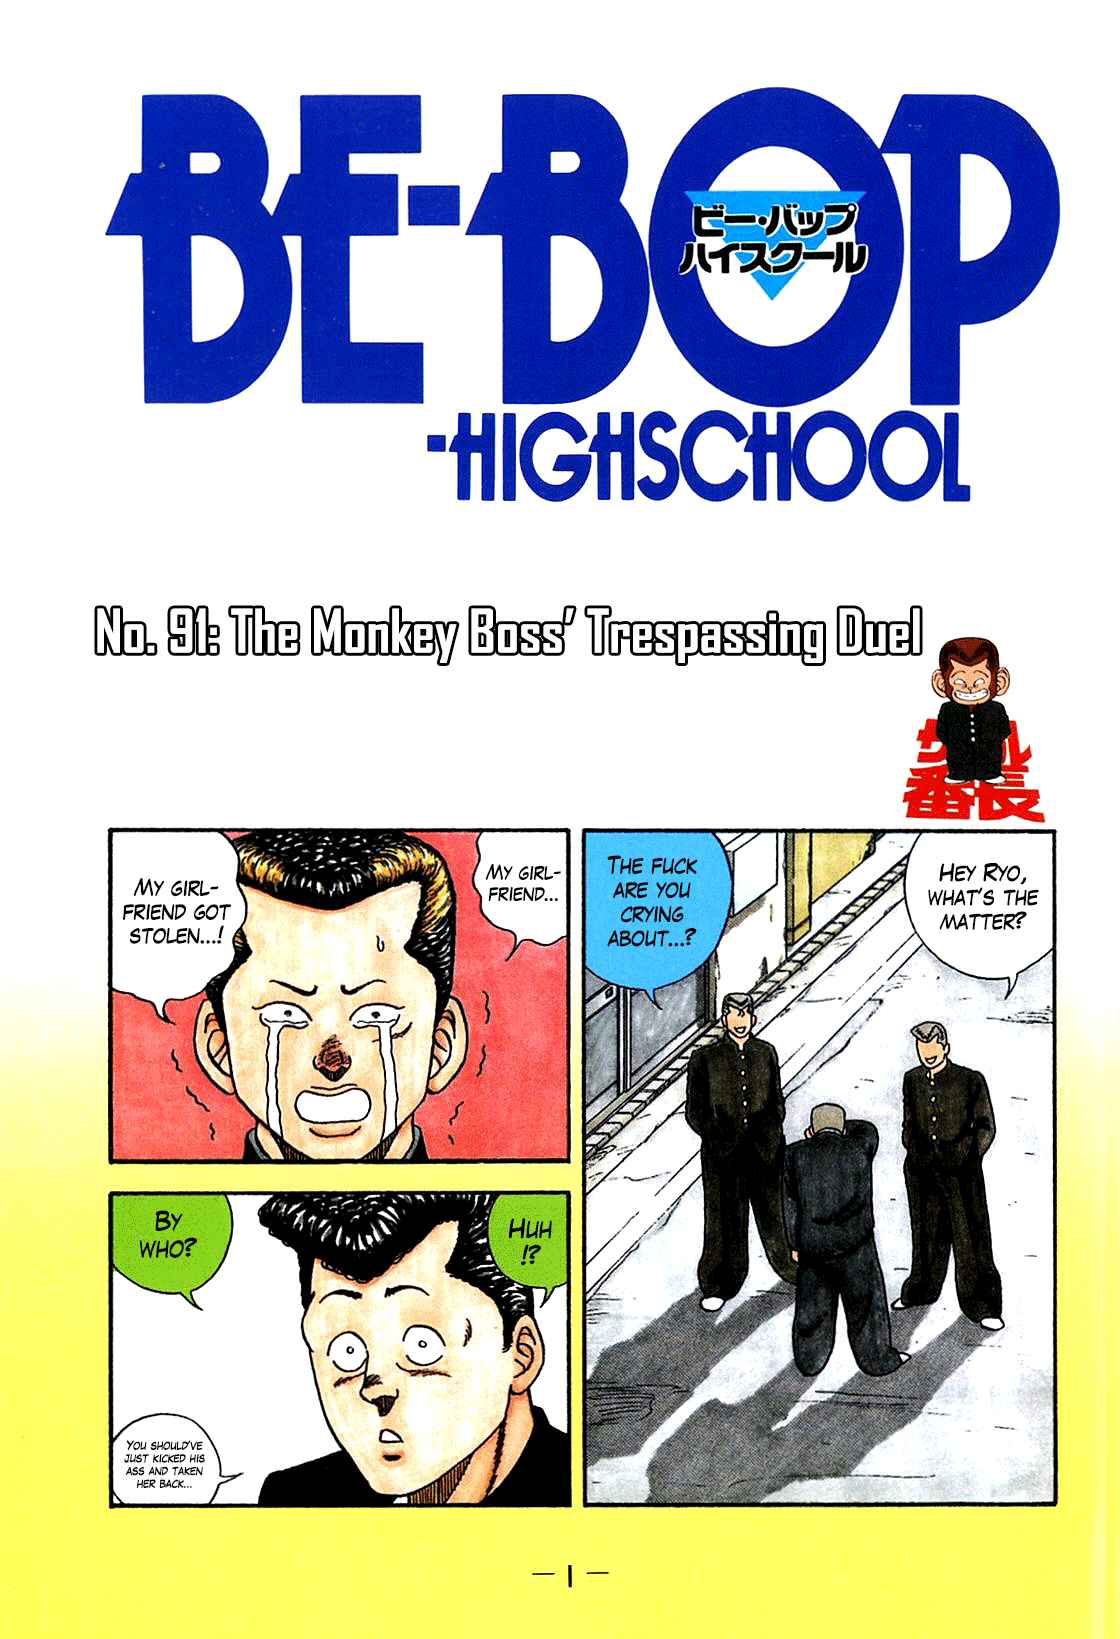 Be Bop High School Vol. 11 Ch. 91